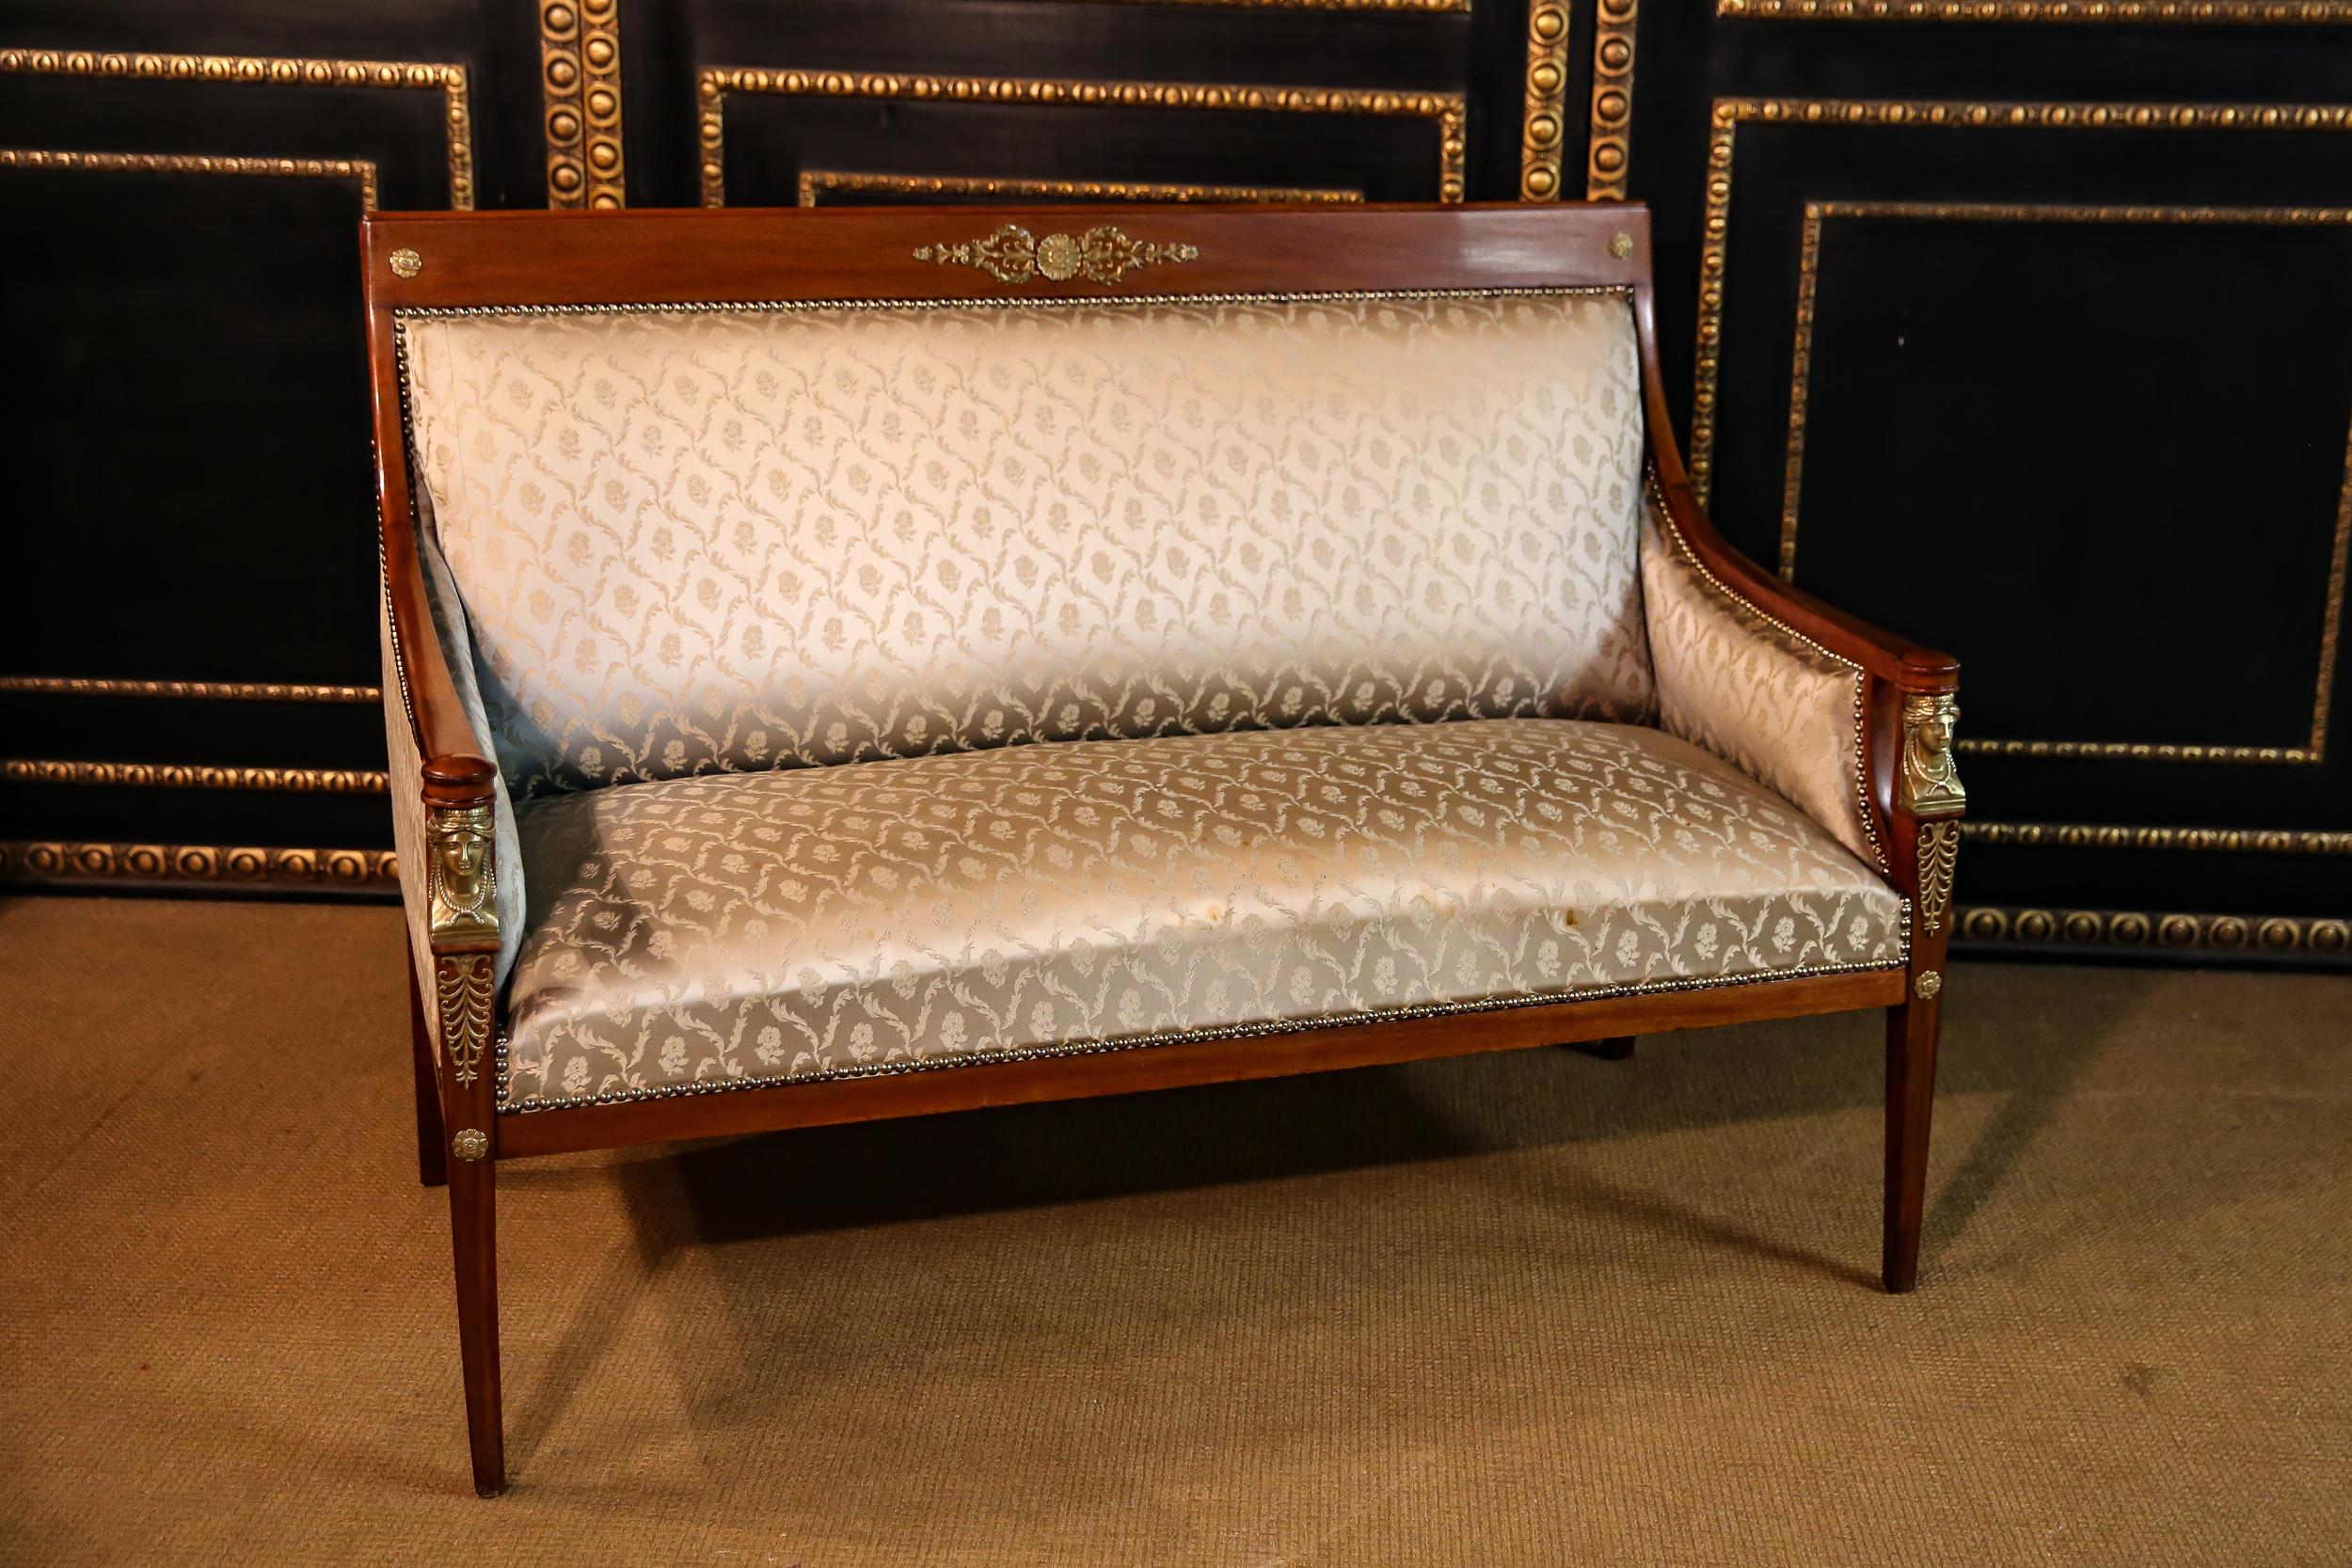 Original Empire Sofa circa 1860-1870 from an Empire Room 4